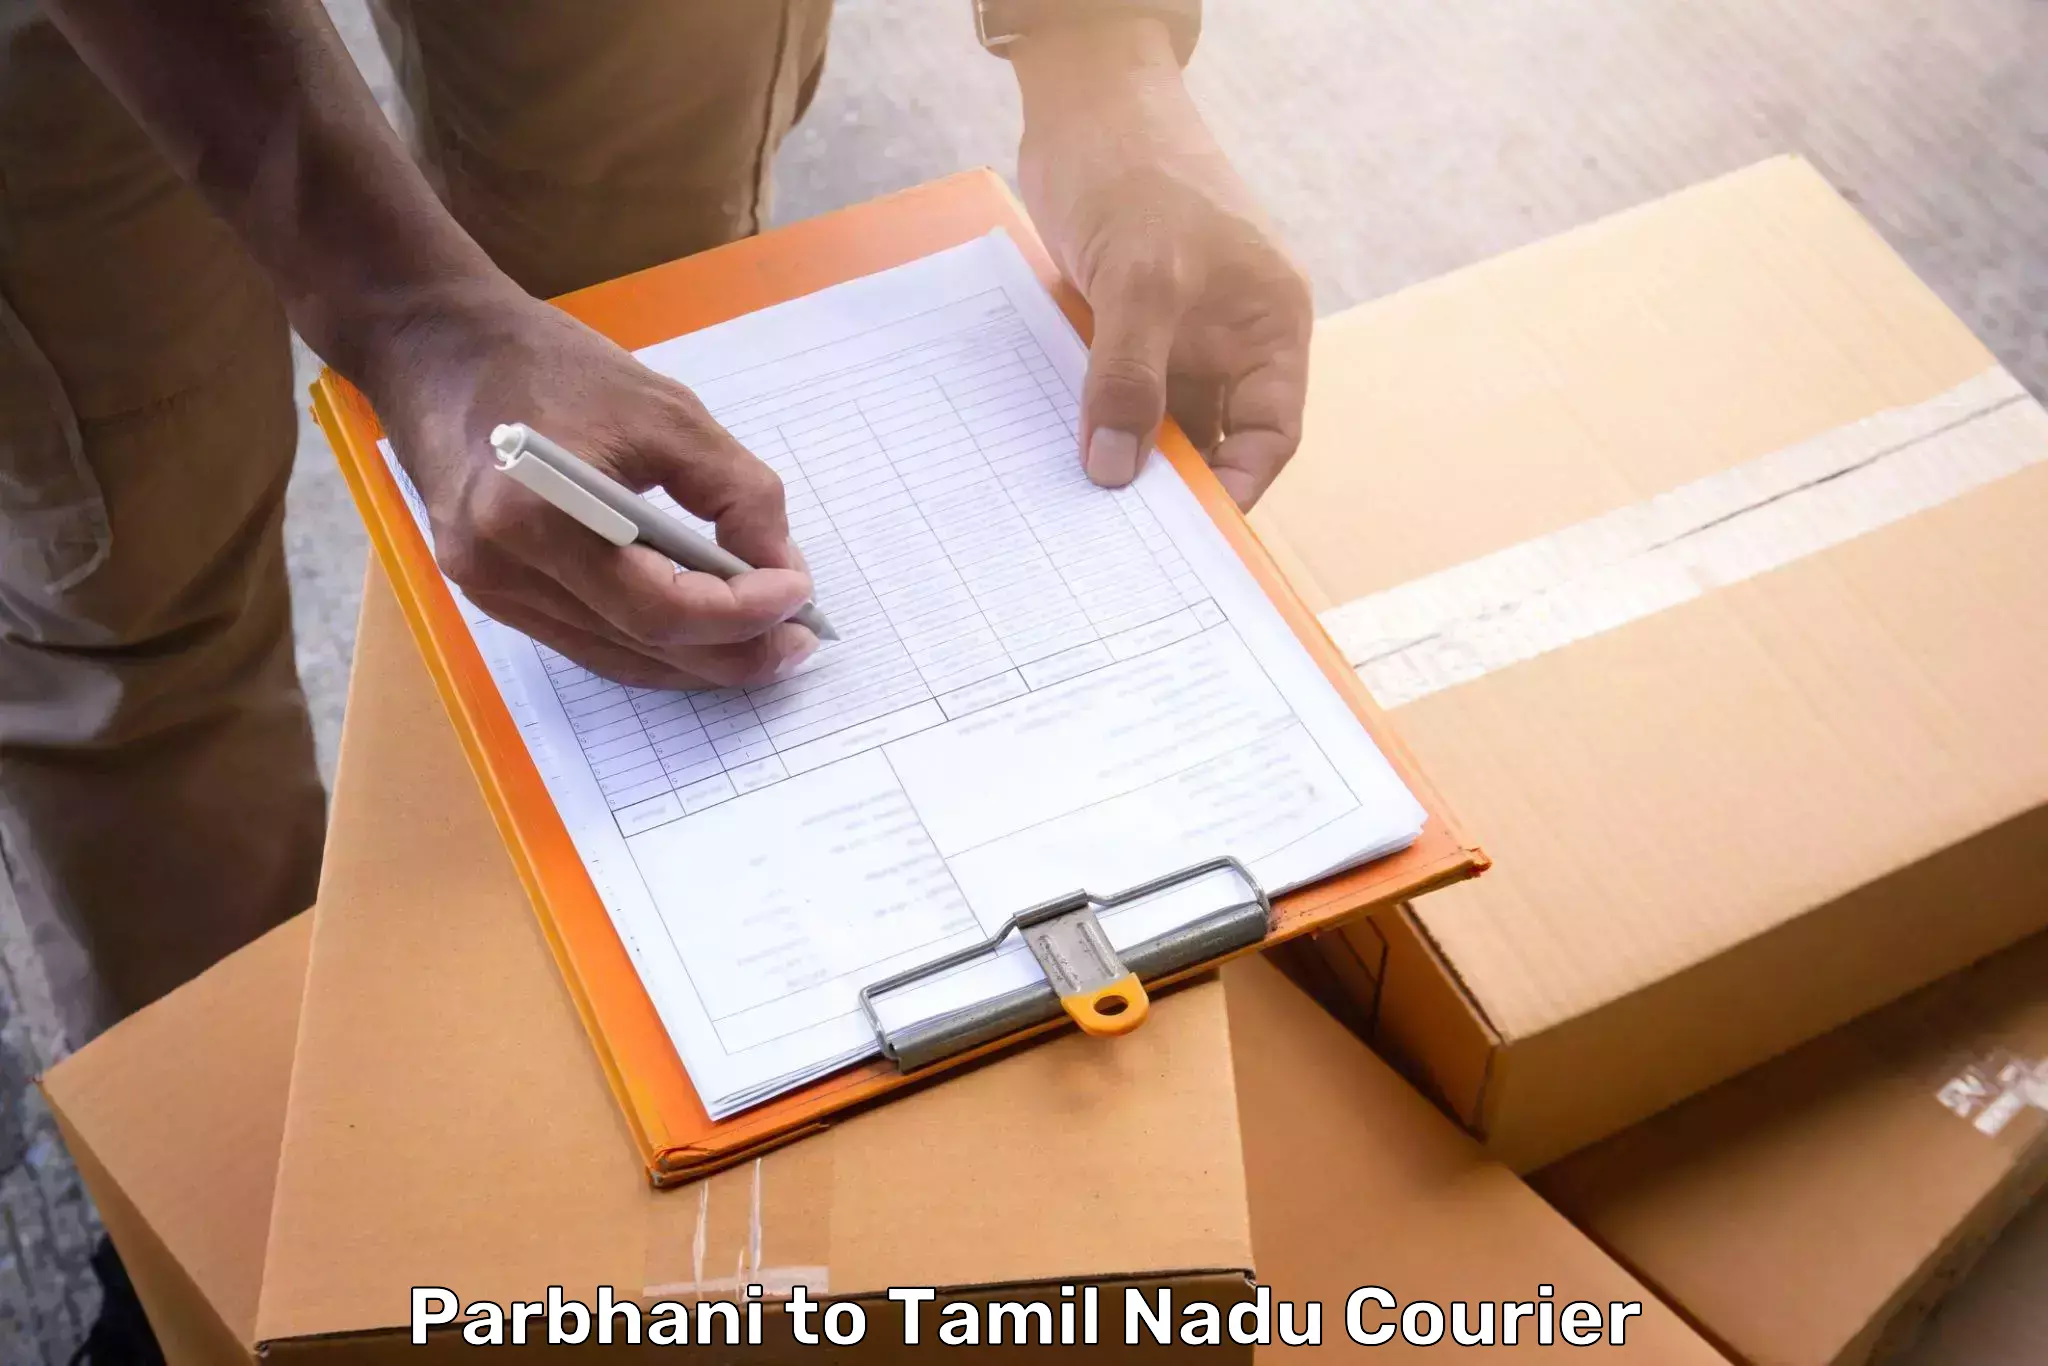 Same day luggage service Parbhani to Tamil Nadu